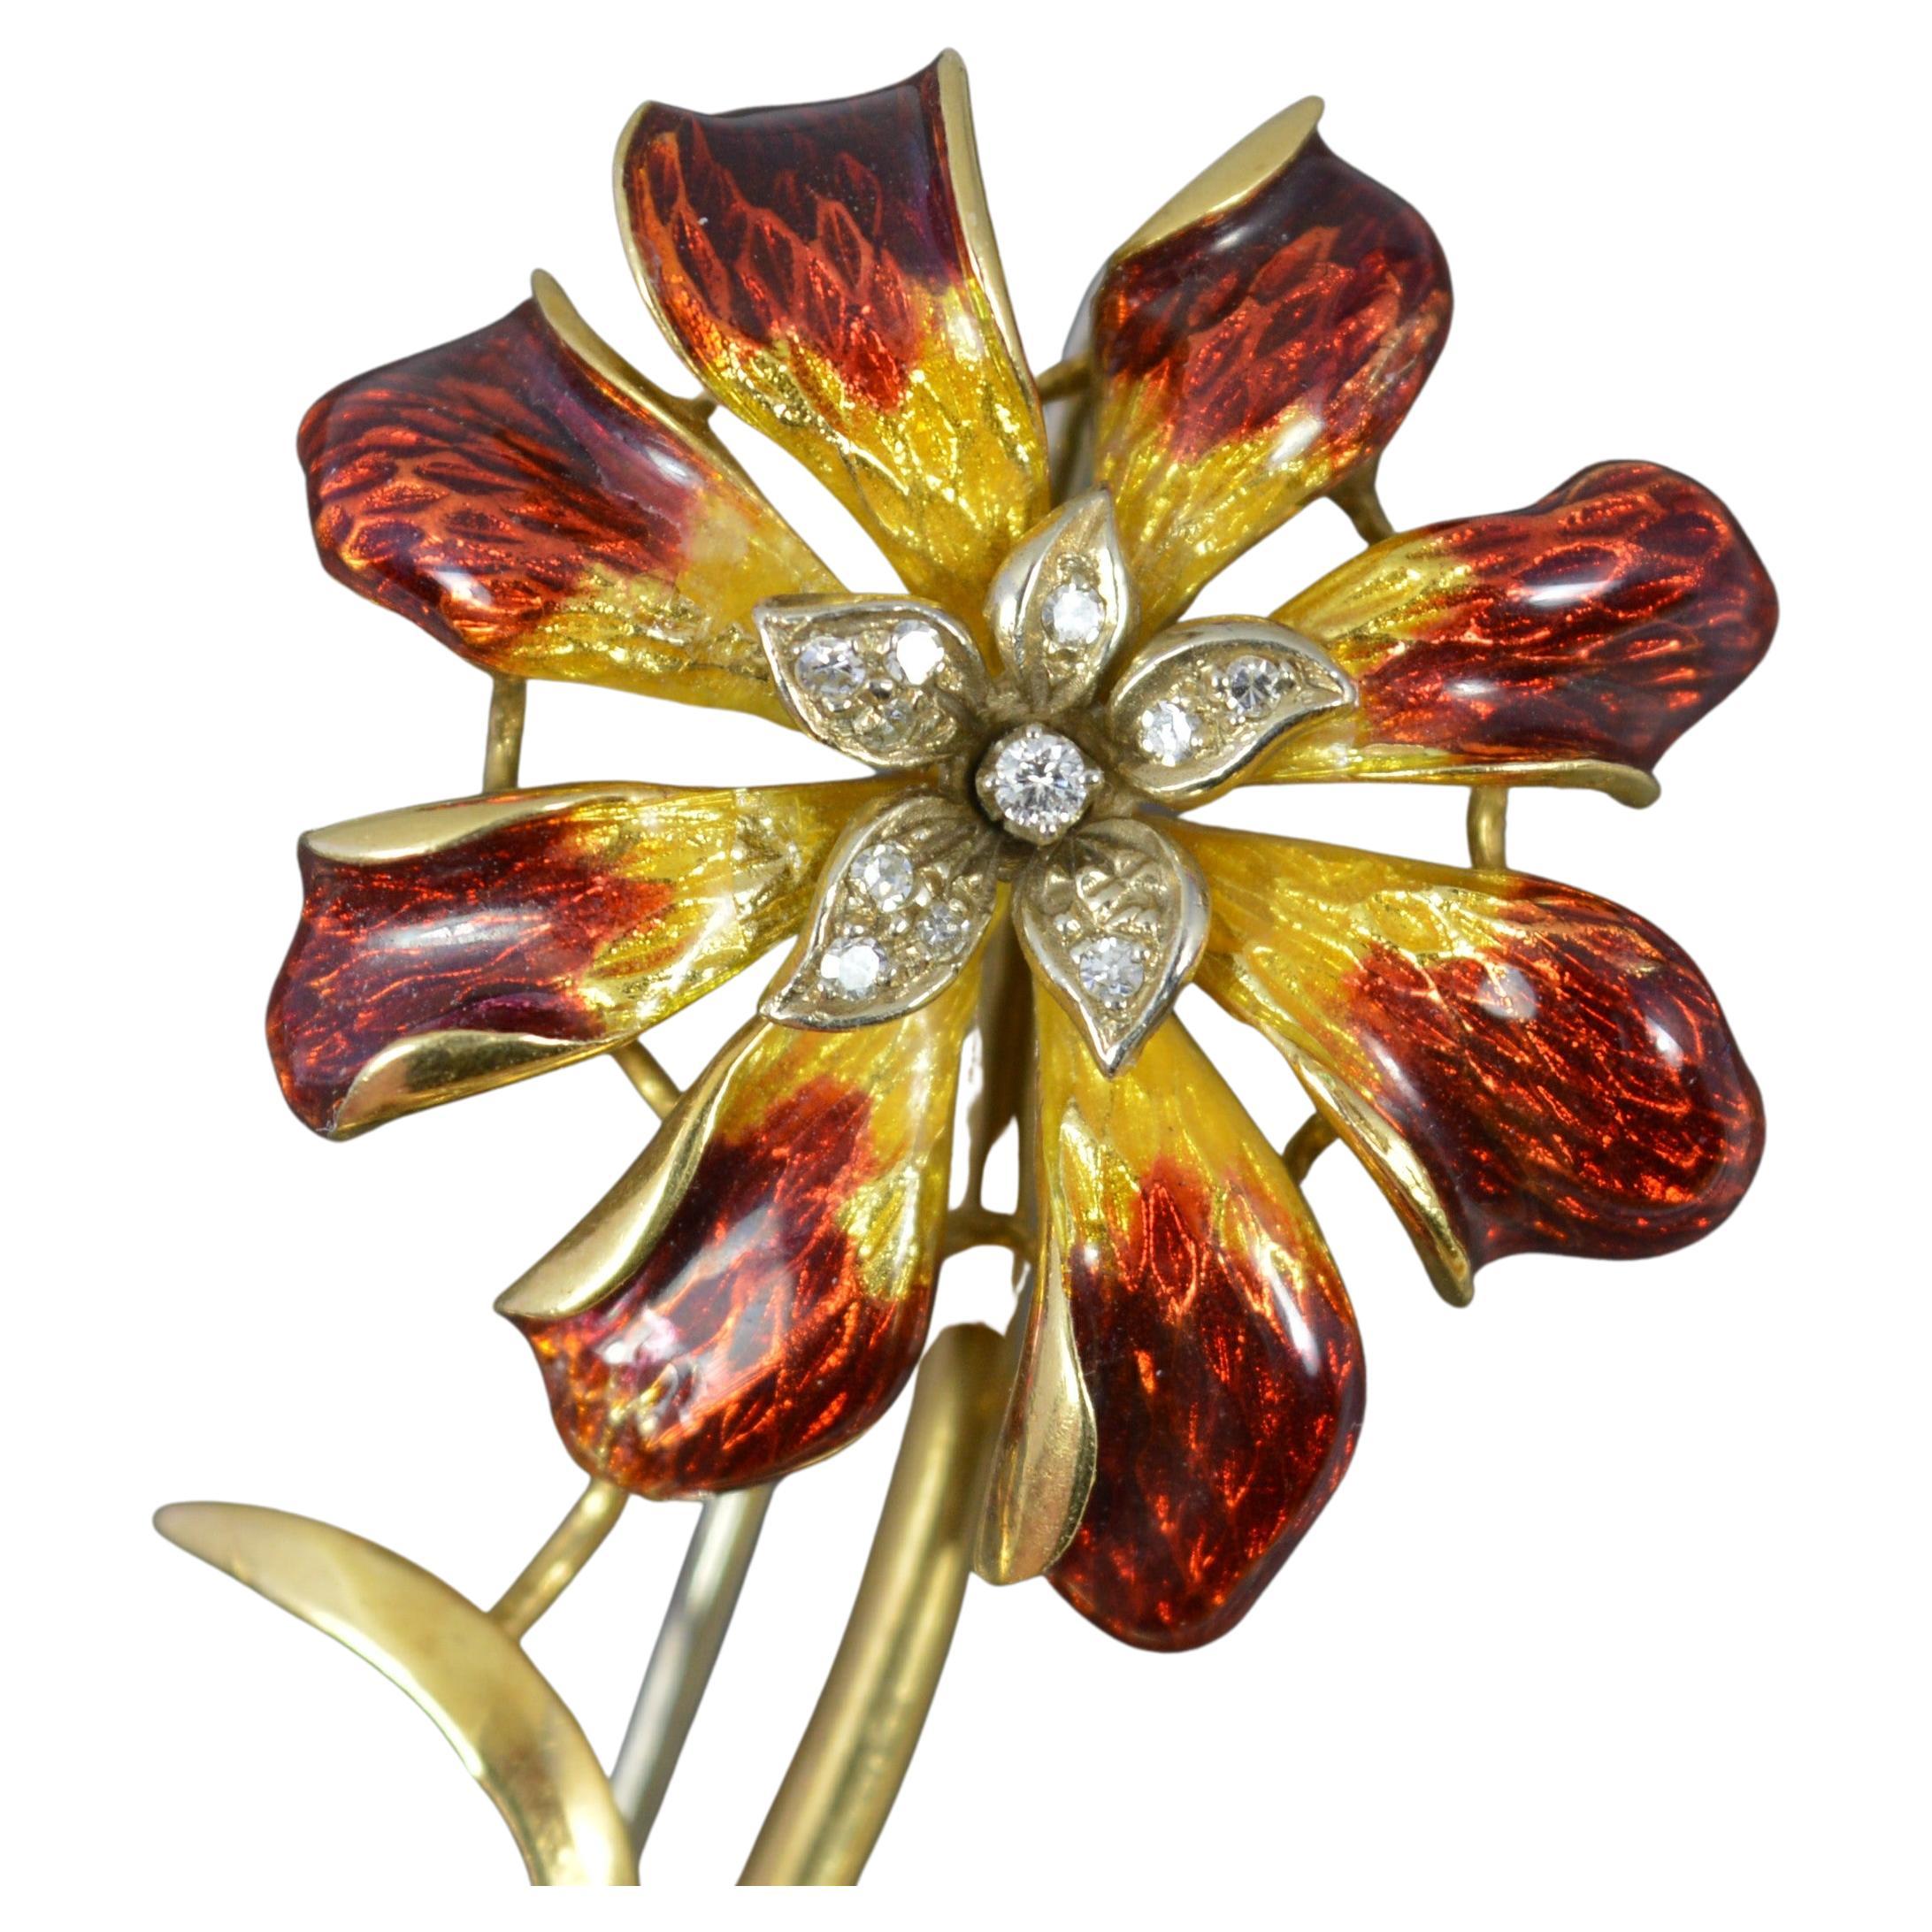 Superb Quality 18 Carat Gold Diamond and Enamel Flower Brooch